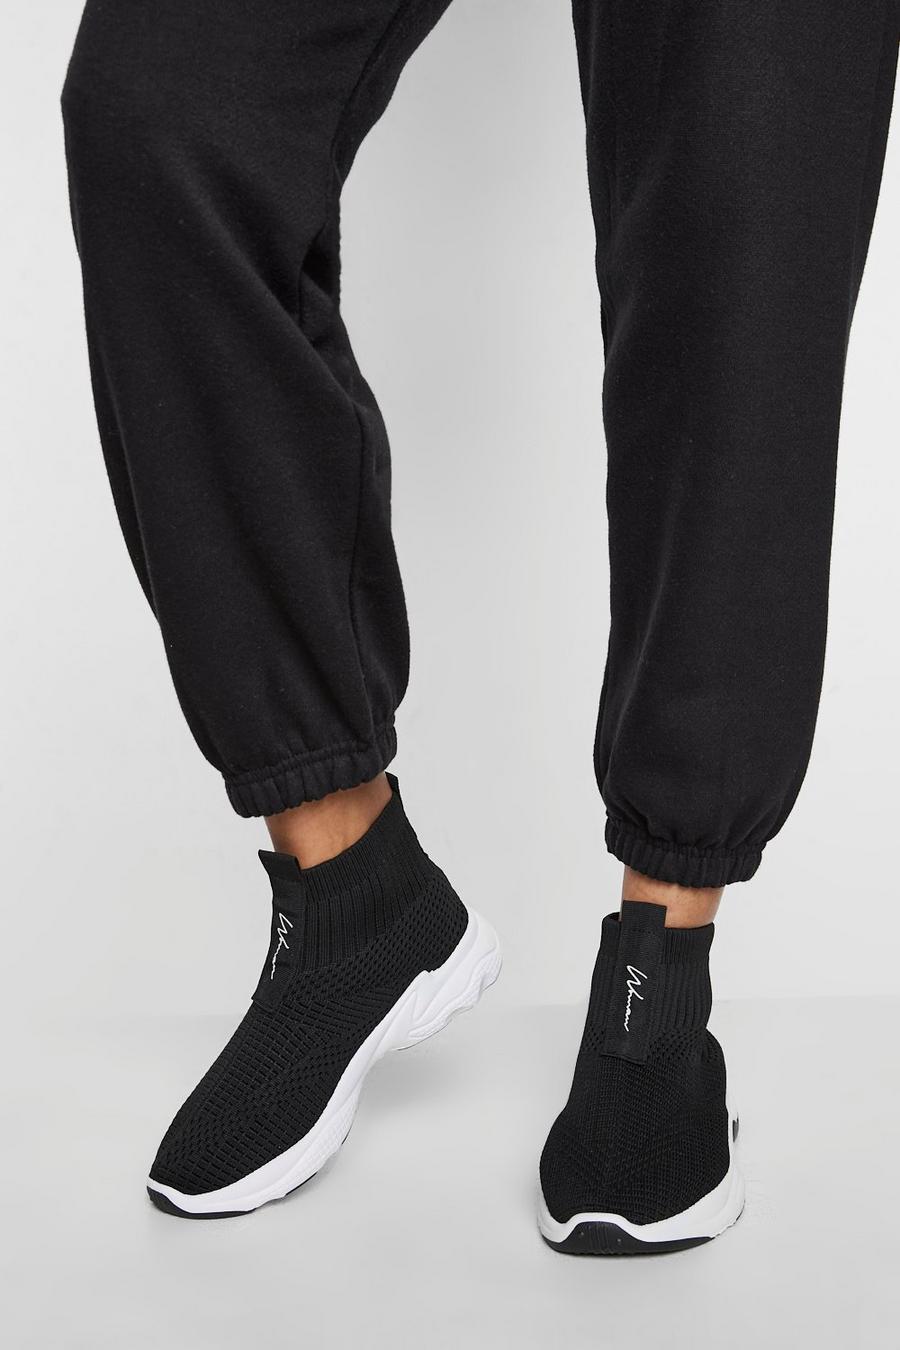 Botas calcetín de holgura ancha con suela gruesa, Black negro